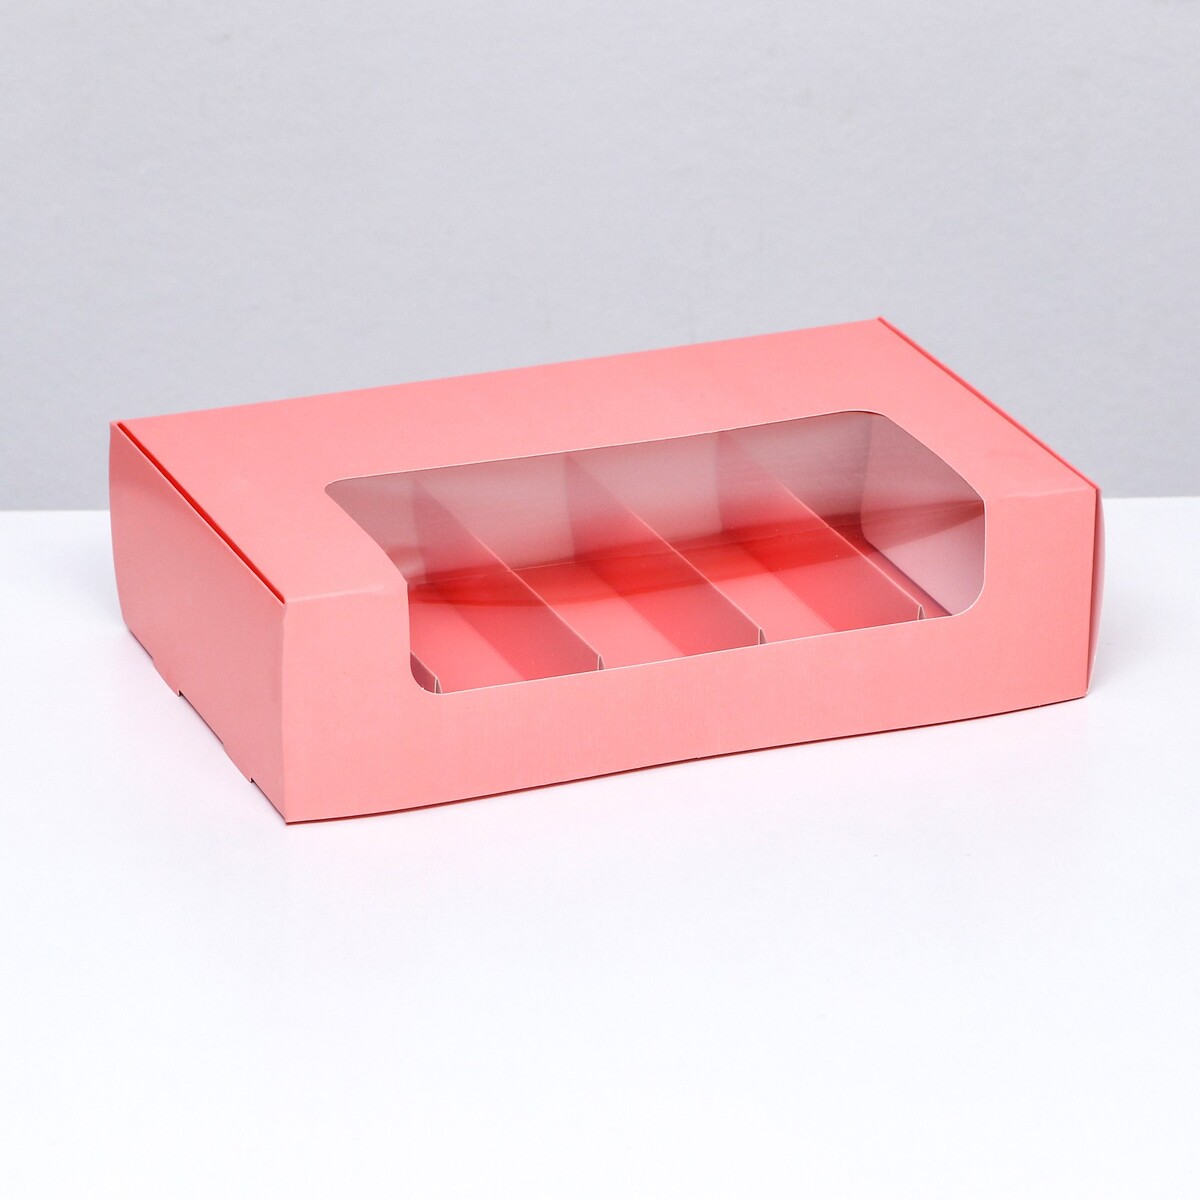 Коробка складная, под 5 эклеров розовый, 25 х 15 х 6,6 см коробка складная под 5 эклеров голубой 25 х 15 х 6 6 см